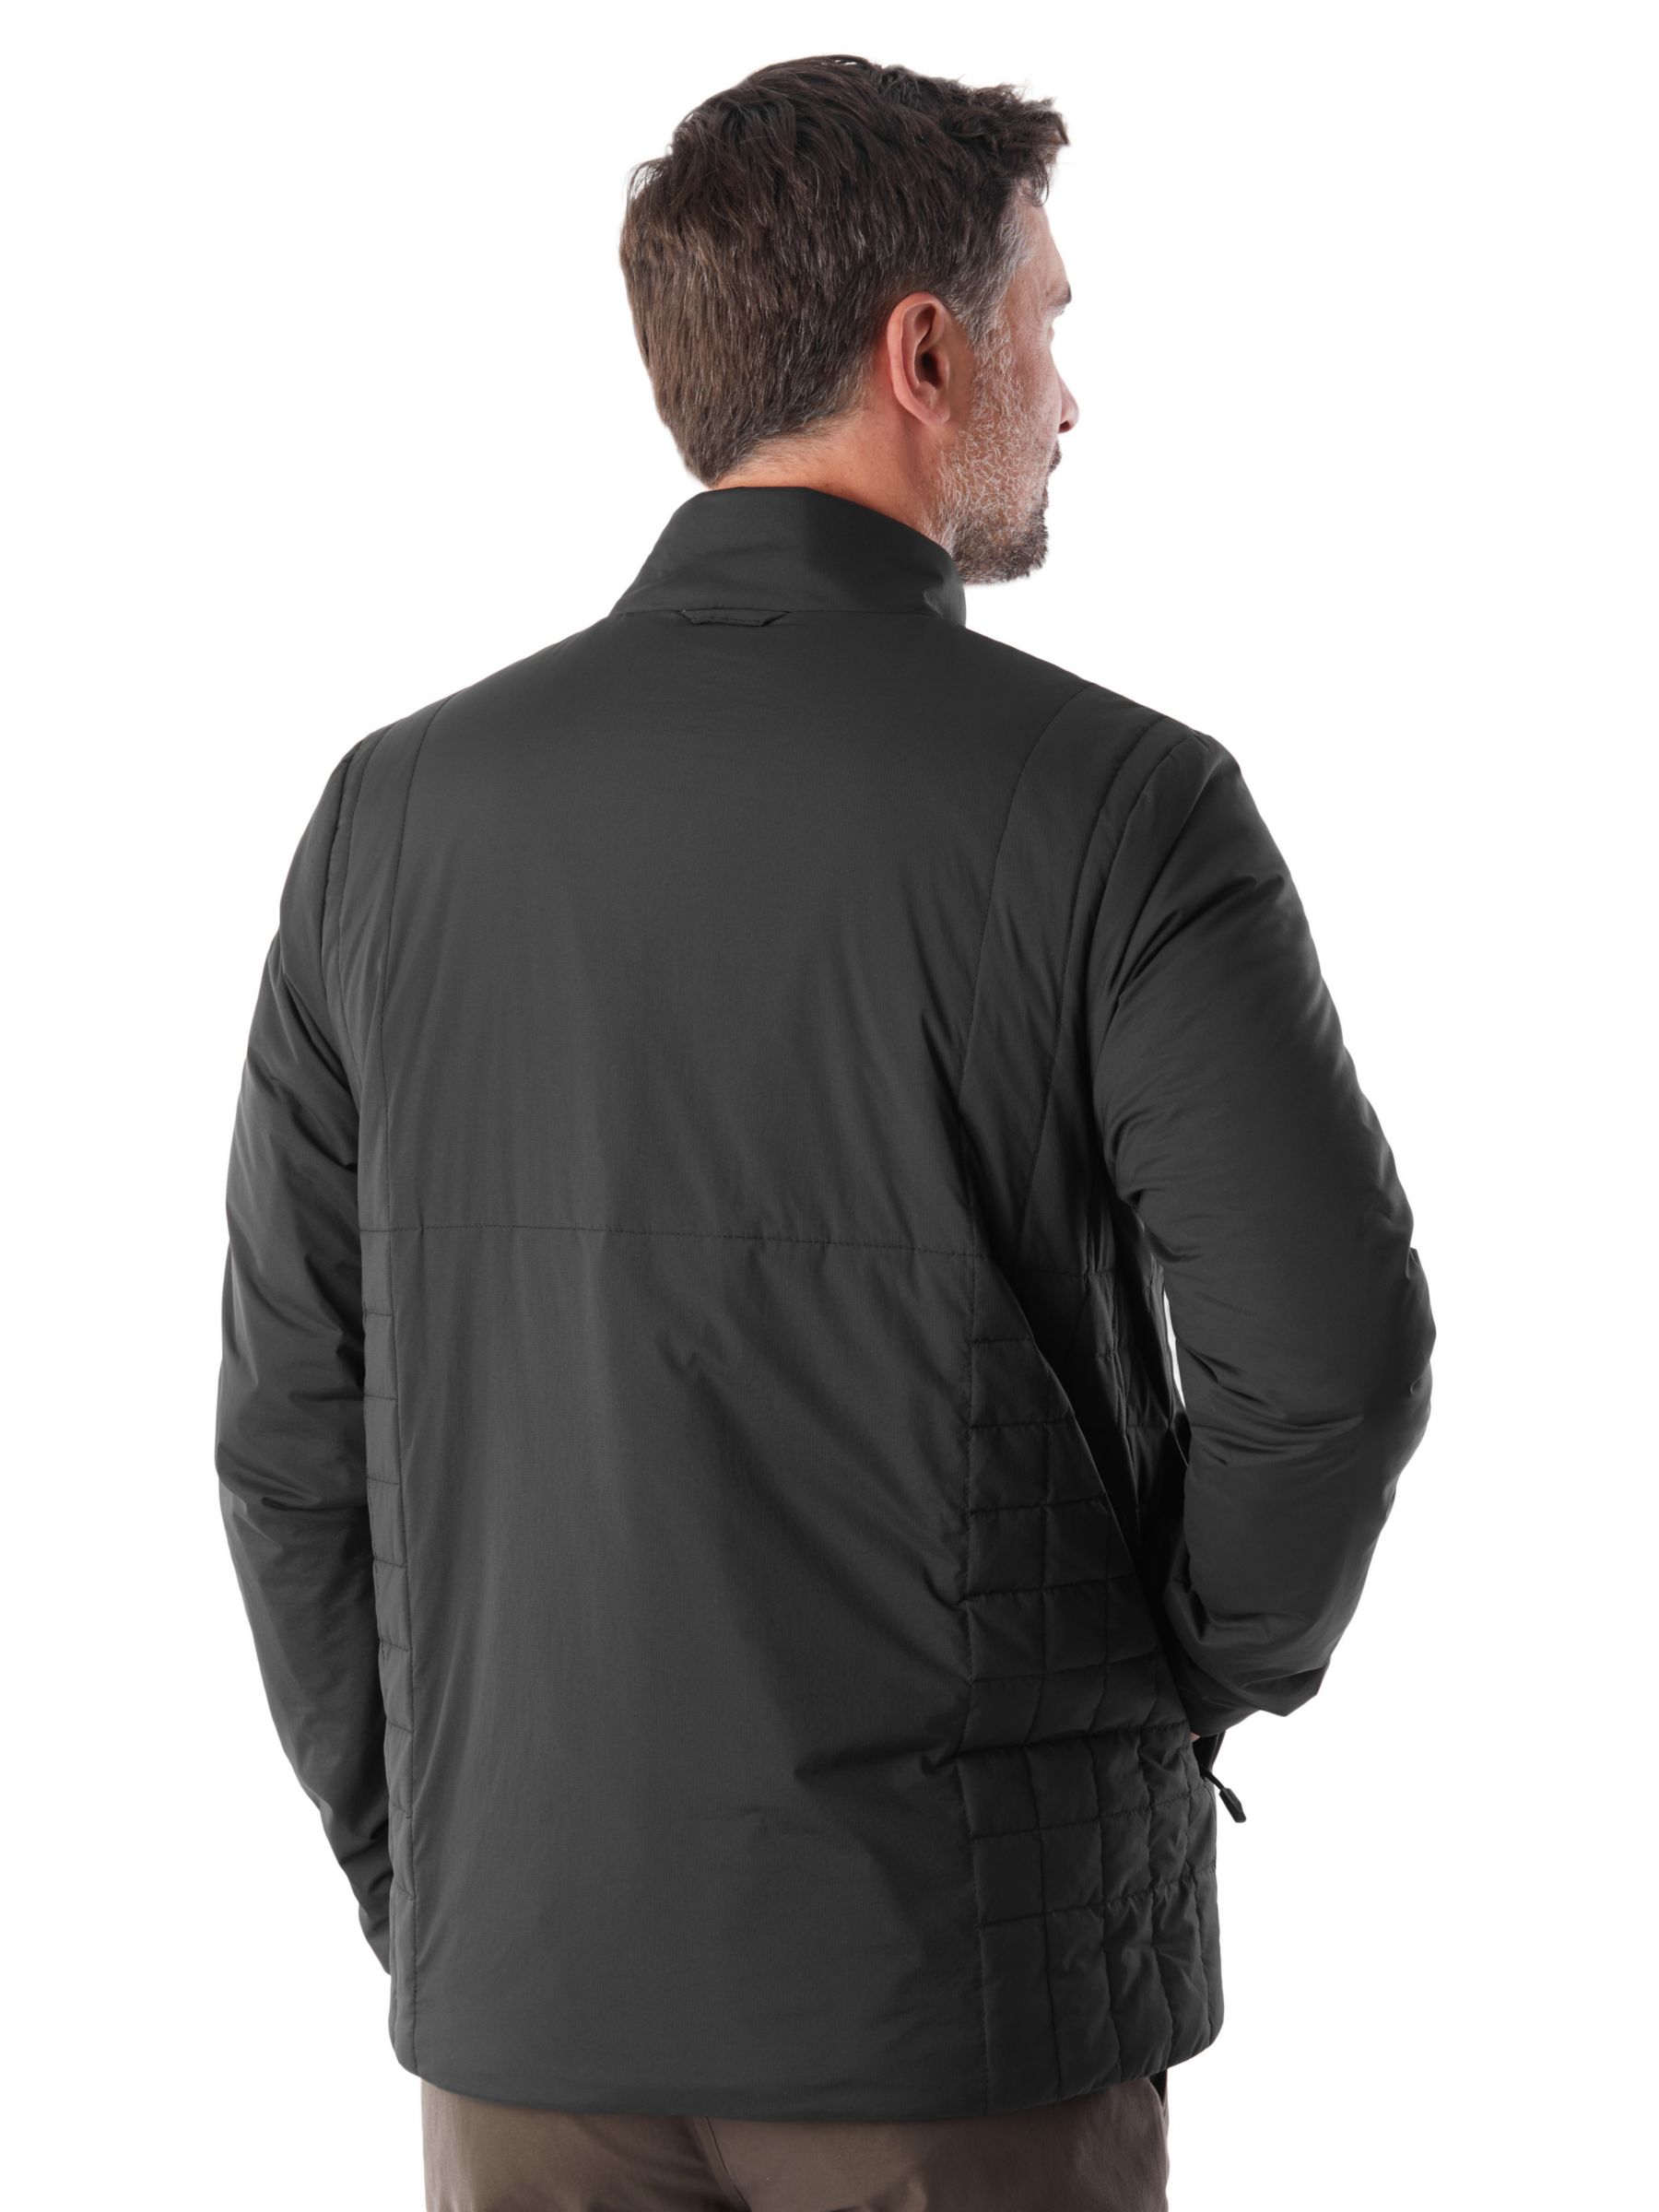 Buy Rohan Rime Men's Insulated Jacket Online at johnlewis.com